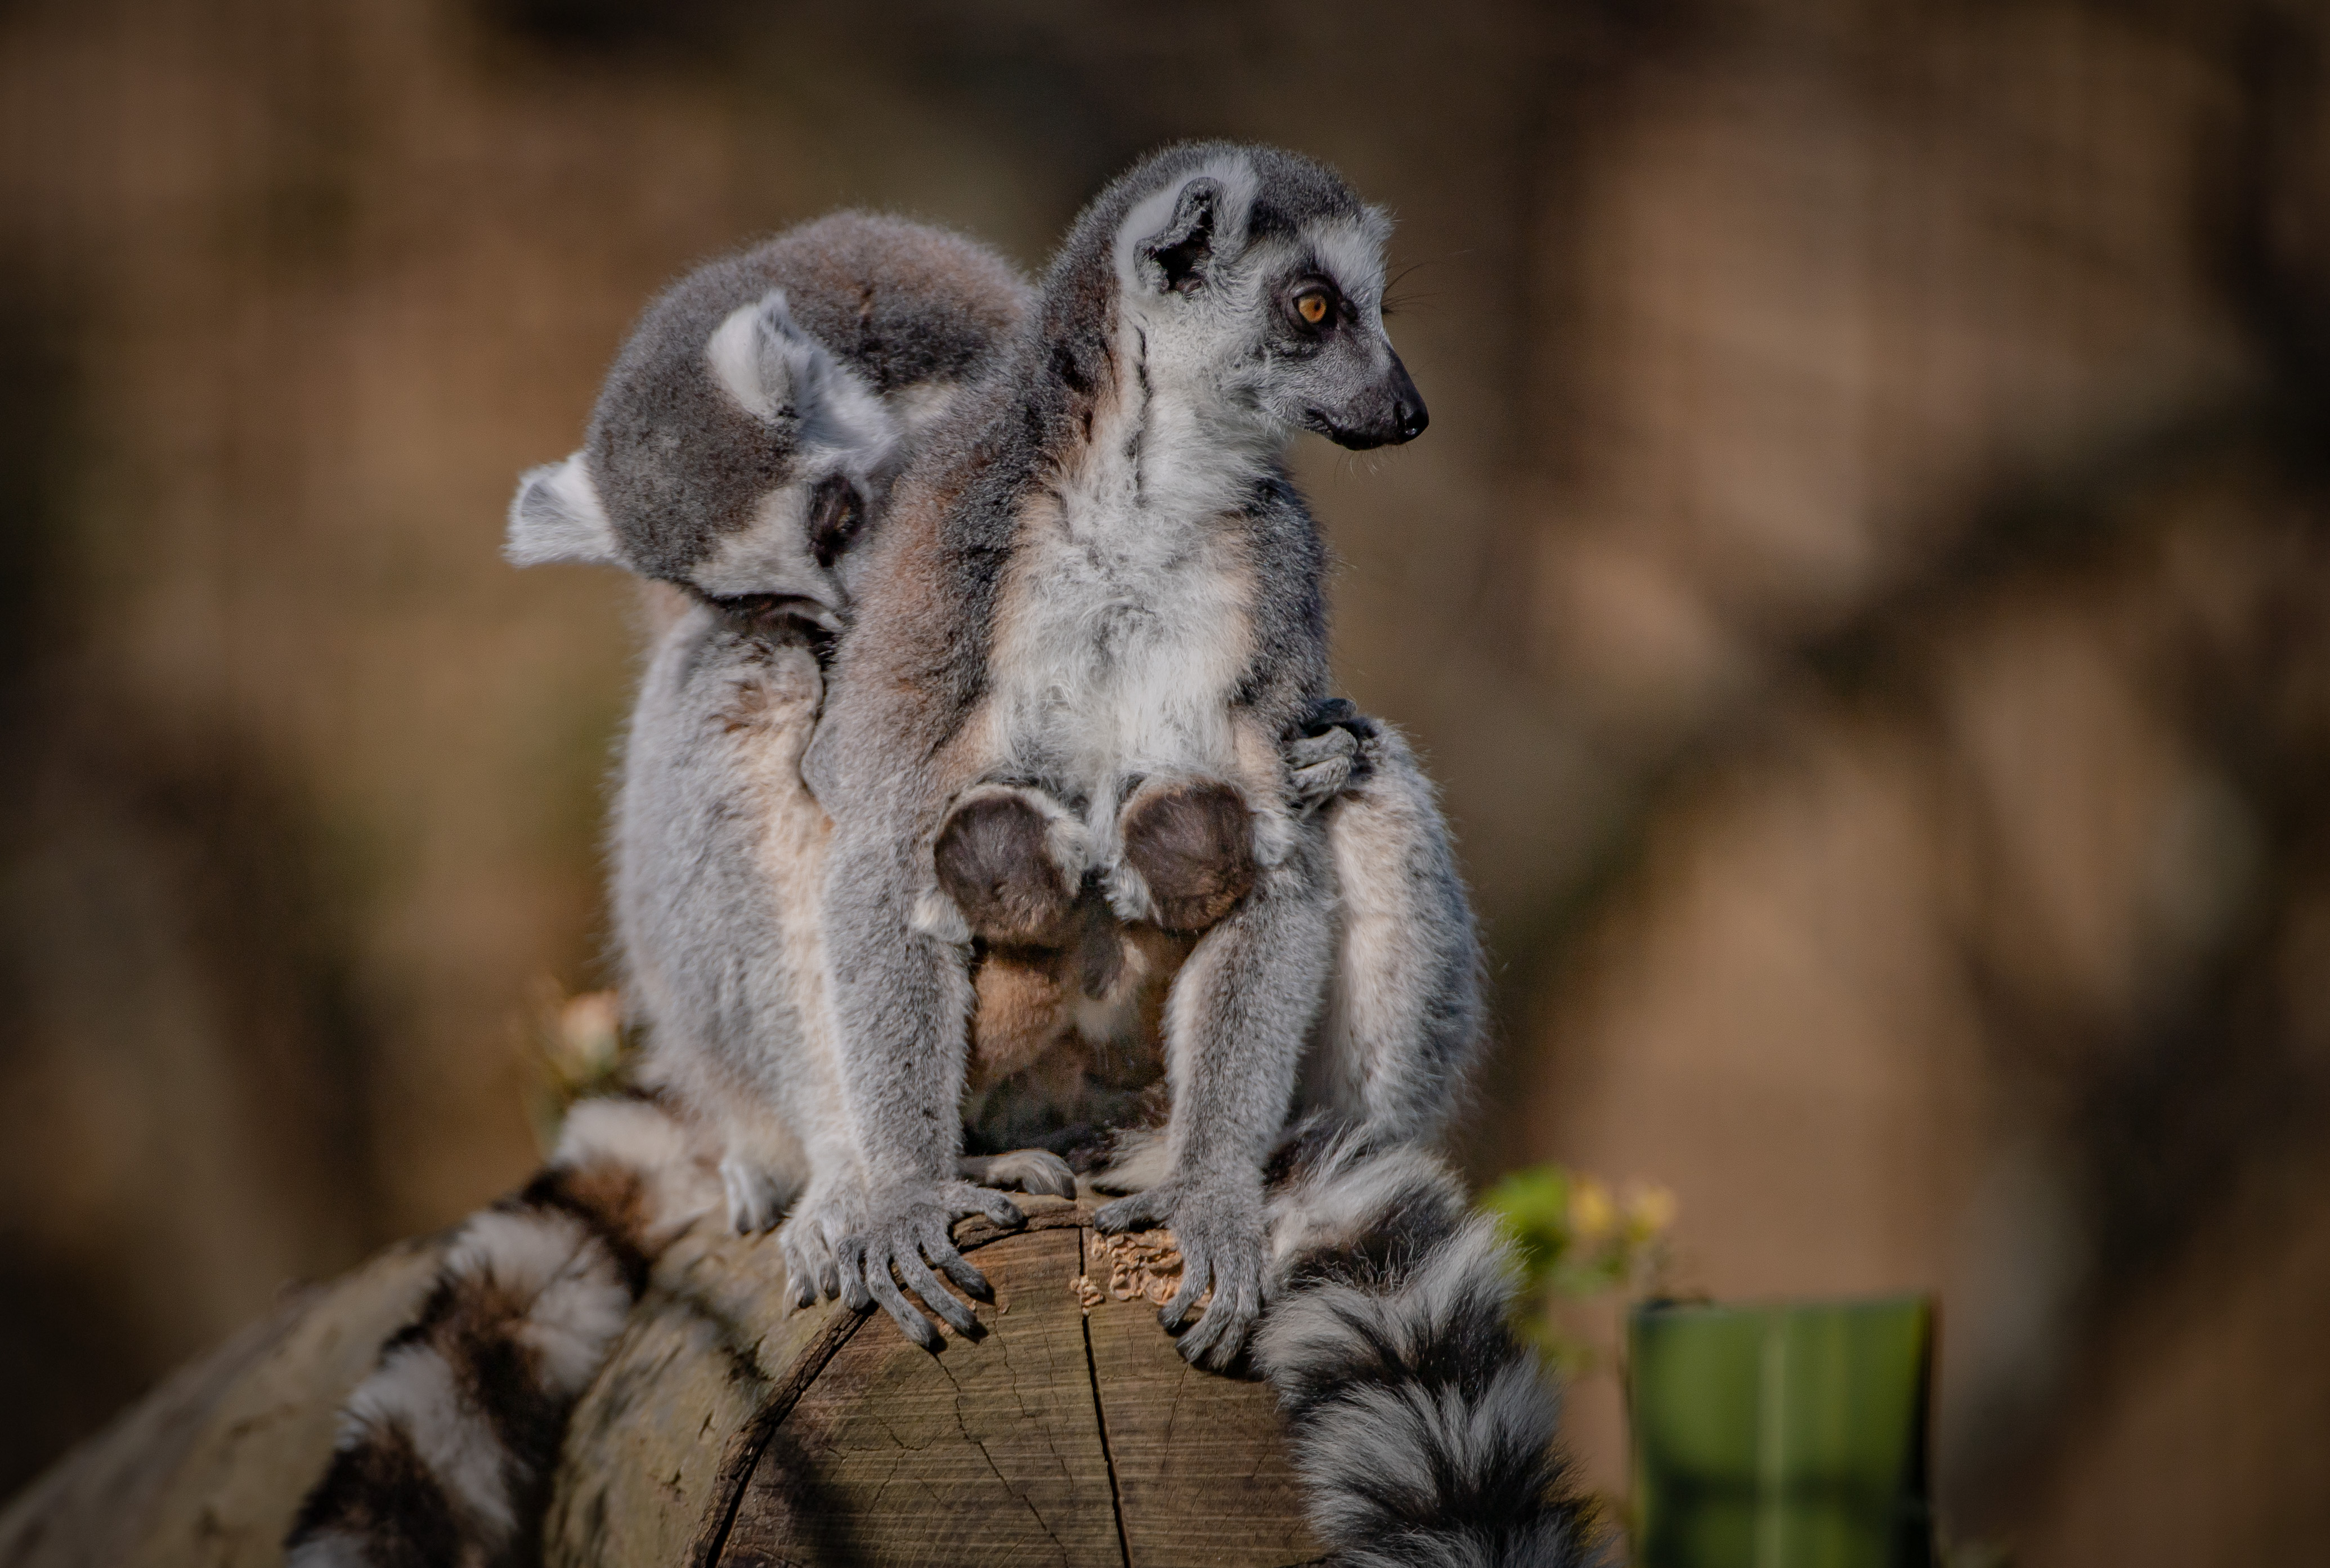 Twin ring-tailed lemurs